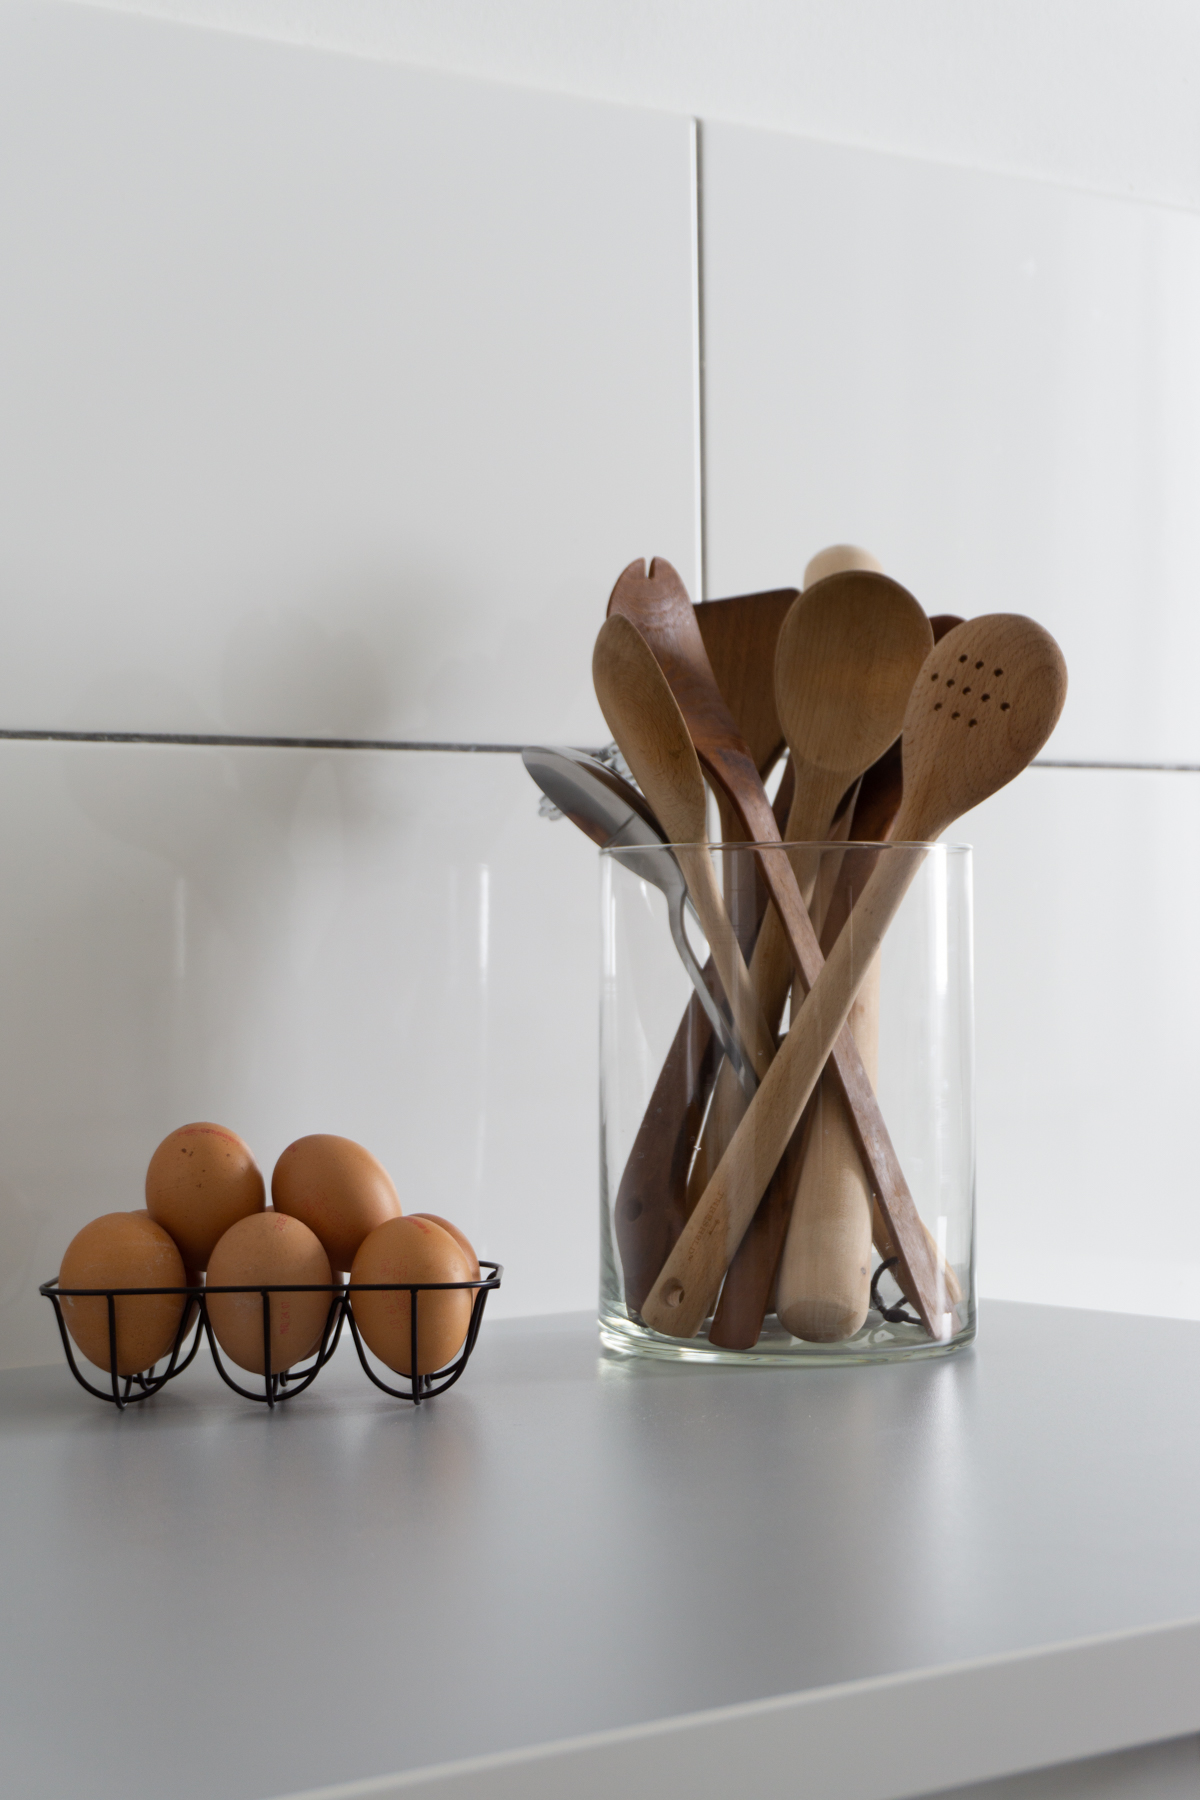 White and Beige Danish Inspired Ikea Kitchen | Wooden Spoon Holder, Wire Egg Holder - RG Daily Blog, Interior Design